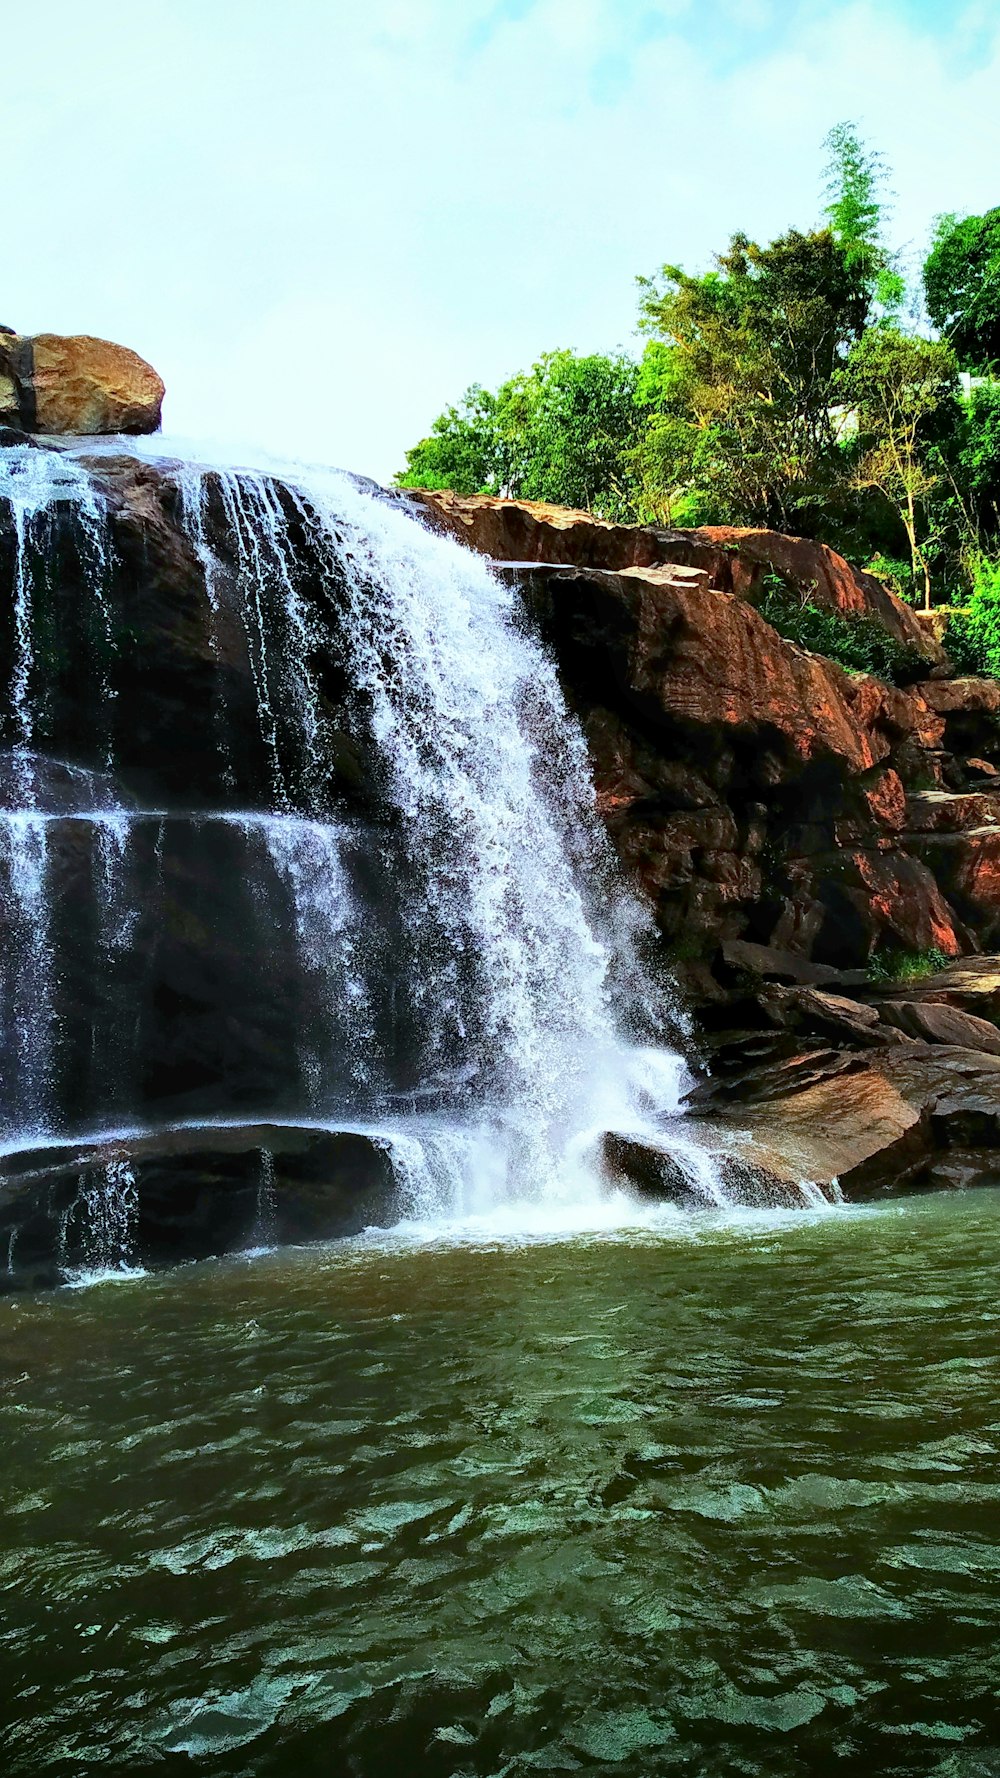 waterfalls on rocks